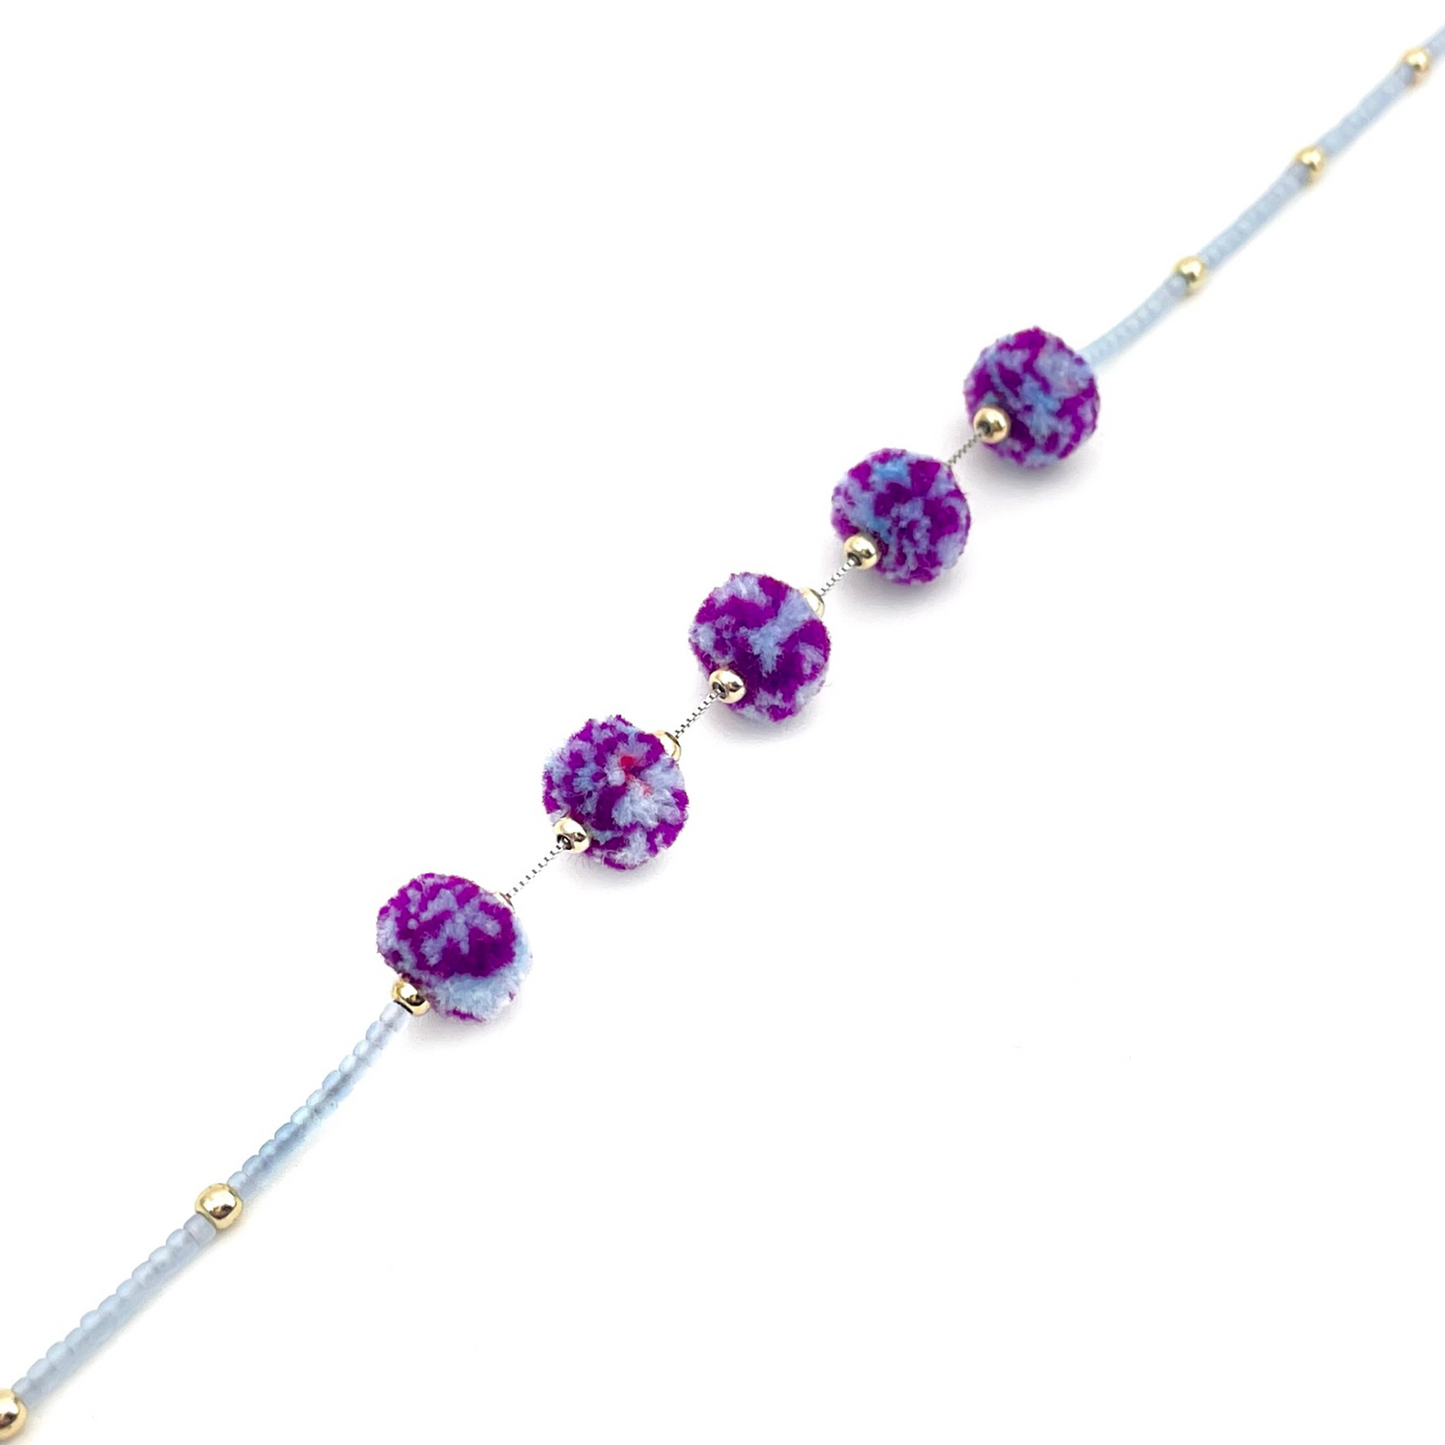 pom'd necklace in hyacinth